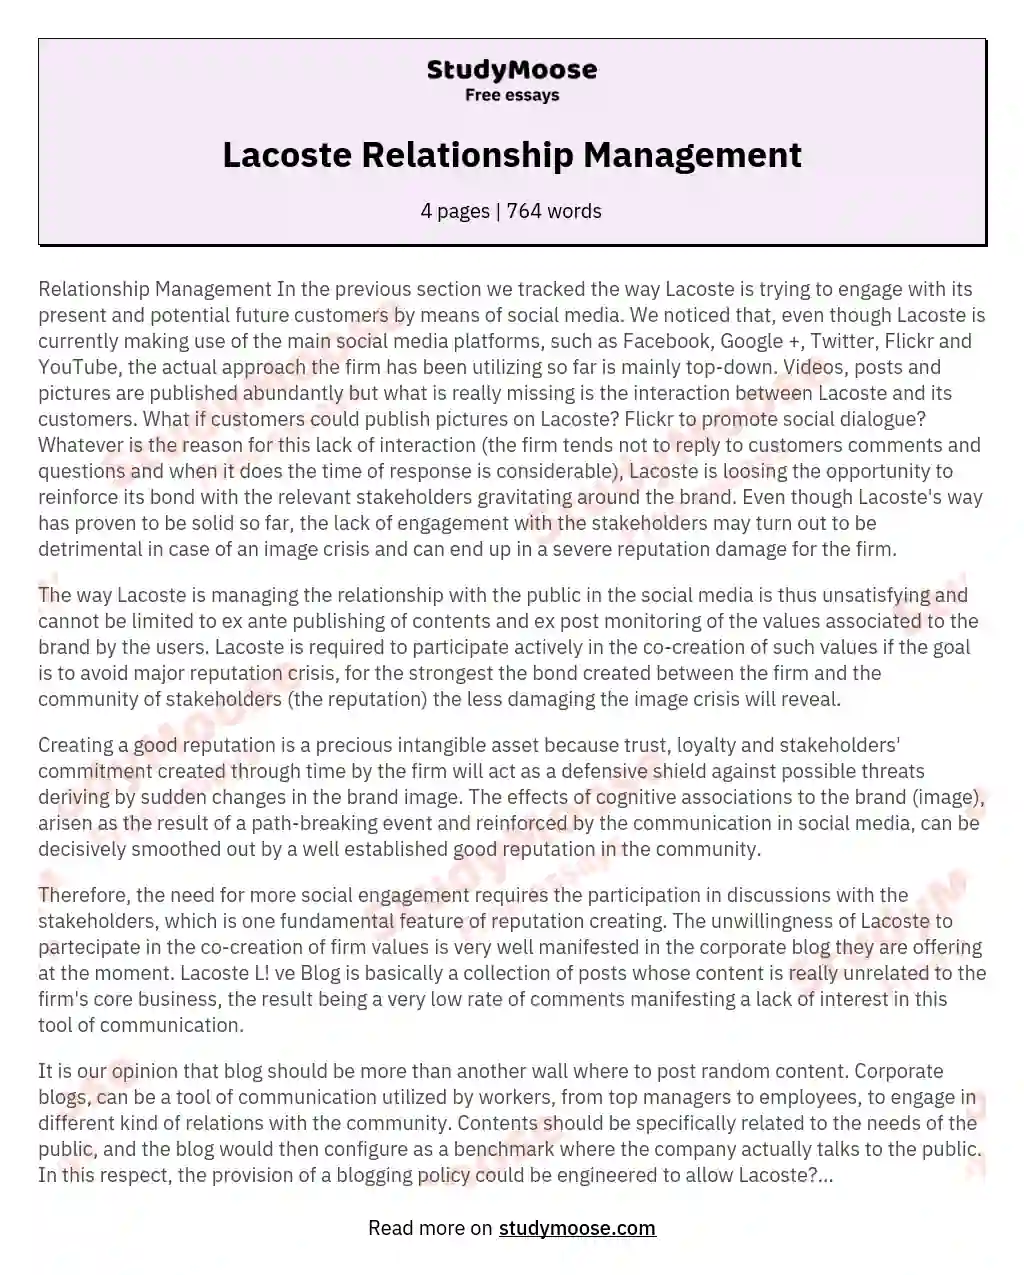 Lacoste Relationship Management essay